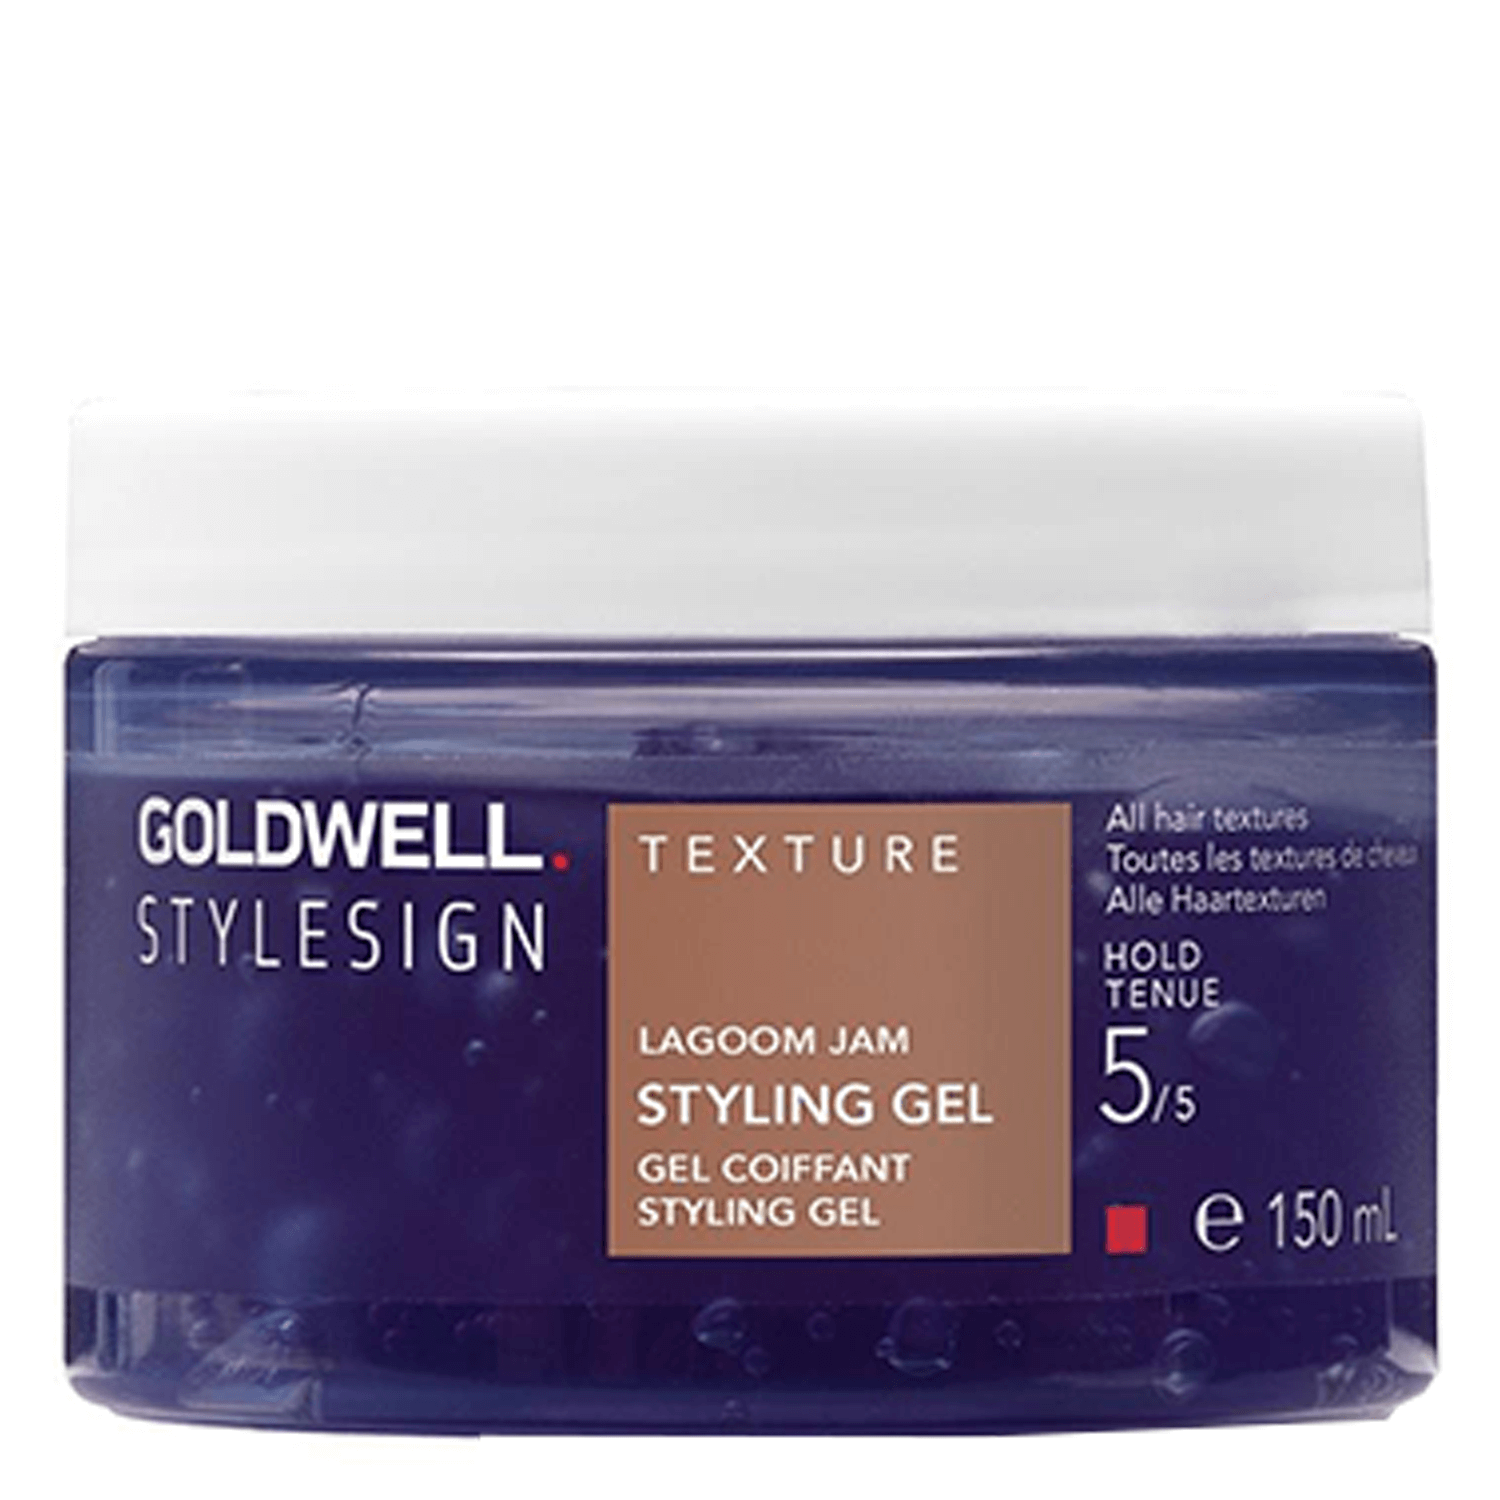 Image du produit de StyleSign - texture lagoom jam styling gel